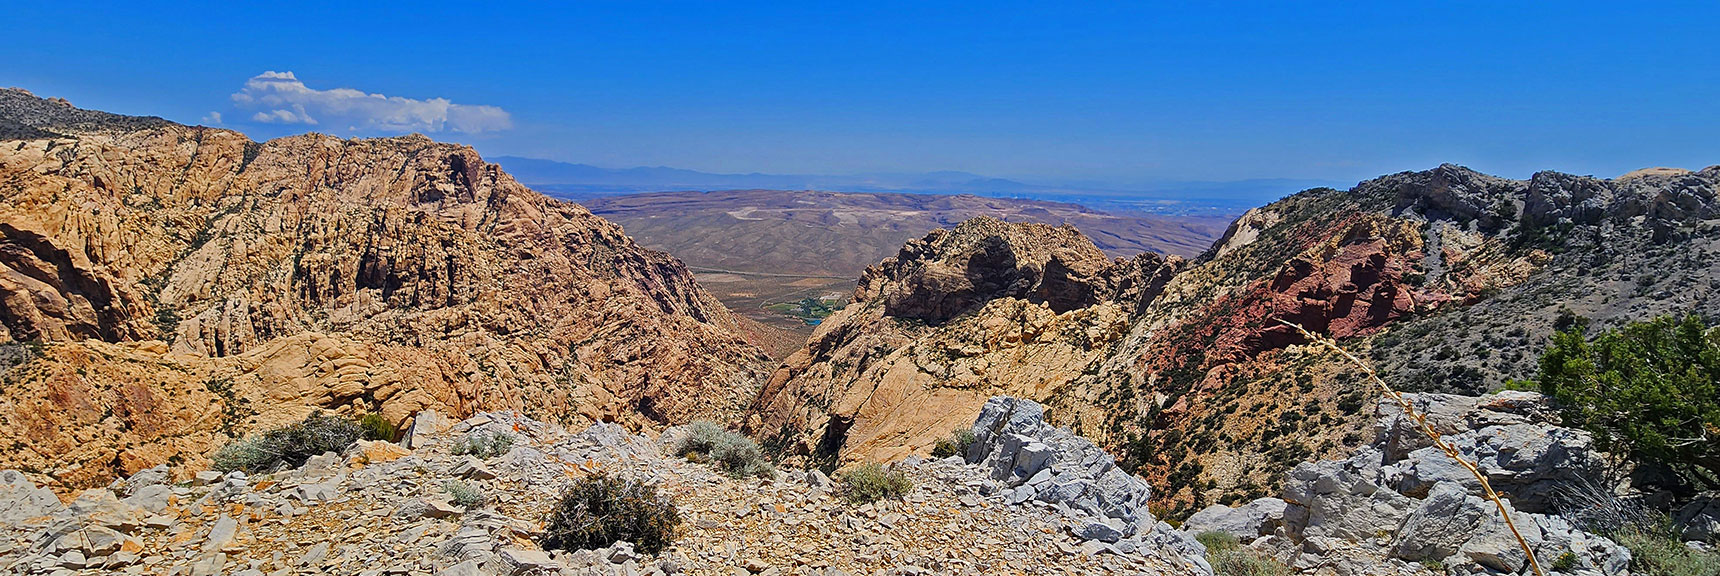 Blue Diamond Hill Through Canyon Below Upper Crest Ridgeline | Little Zion | Rainbow Mountain Wilderness, Nevada